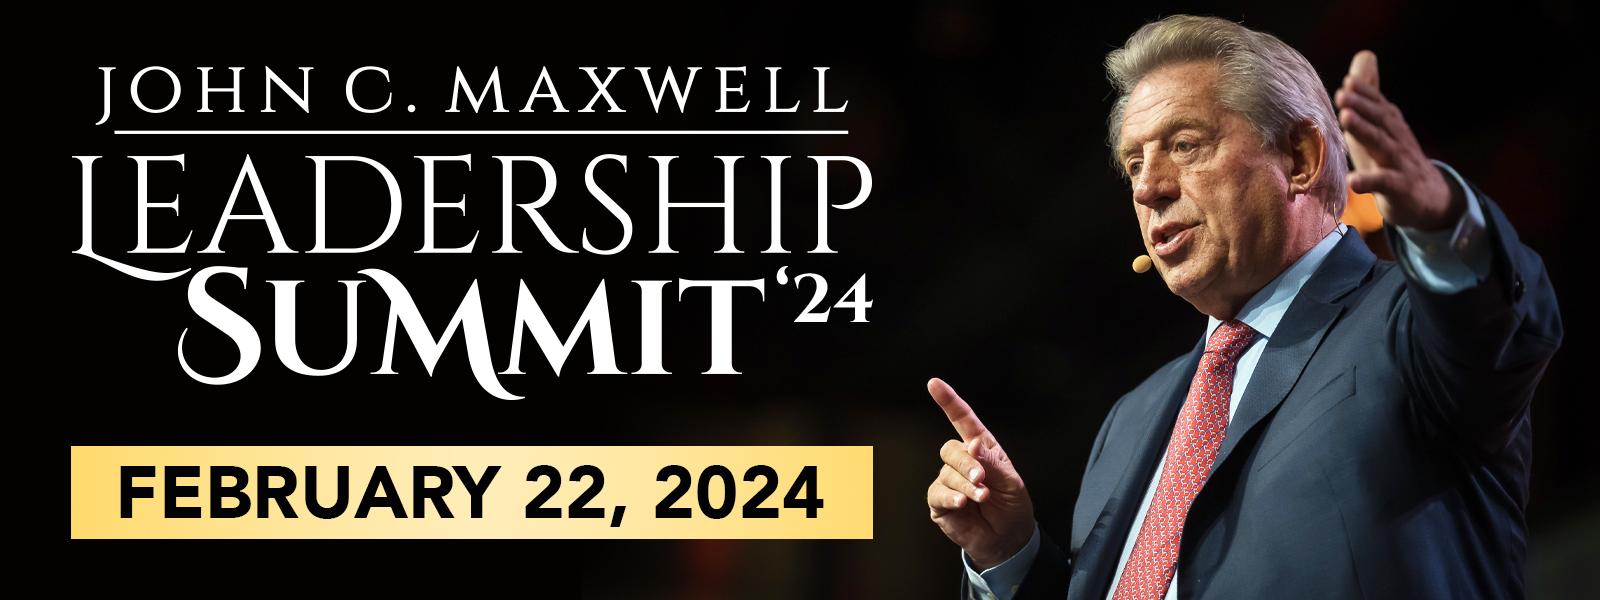 John C. Maxwell Leadership Summit